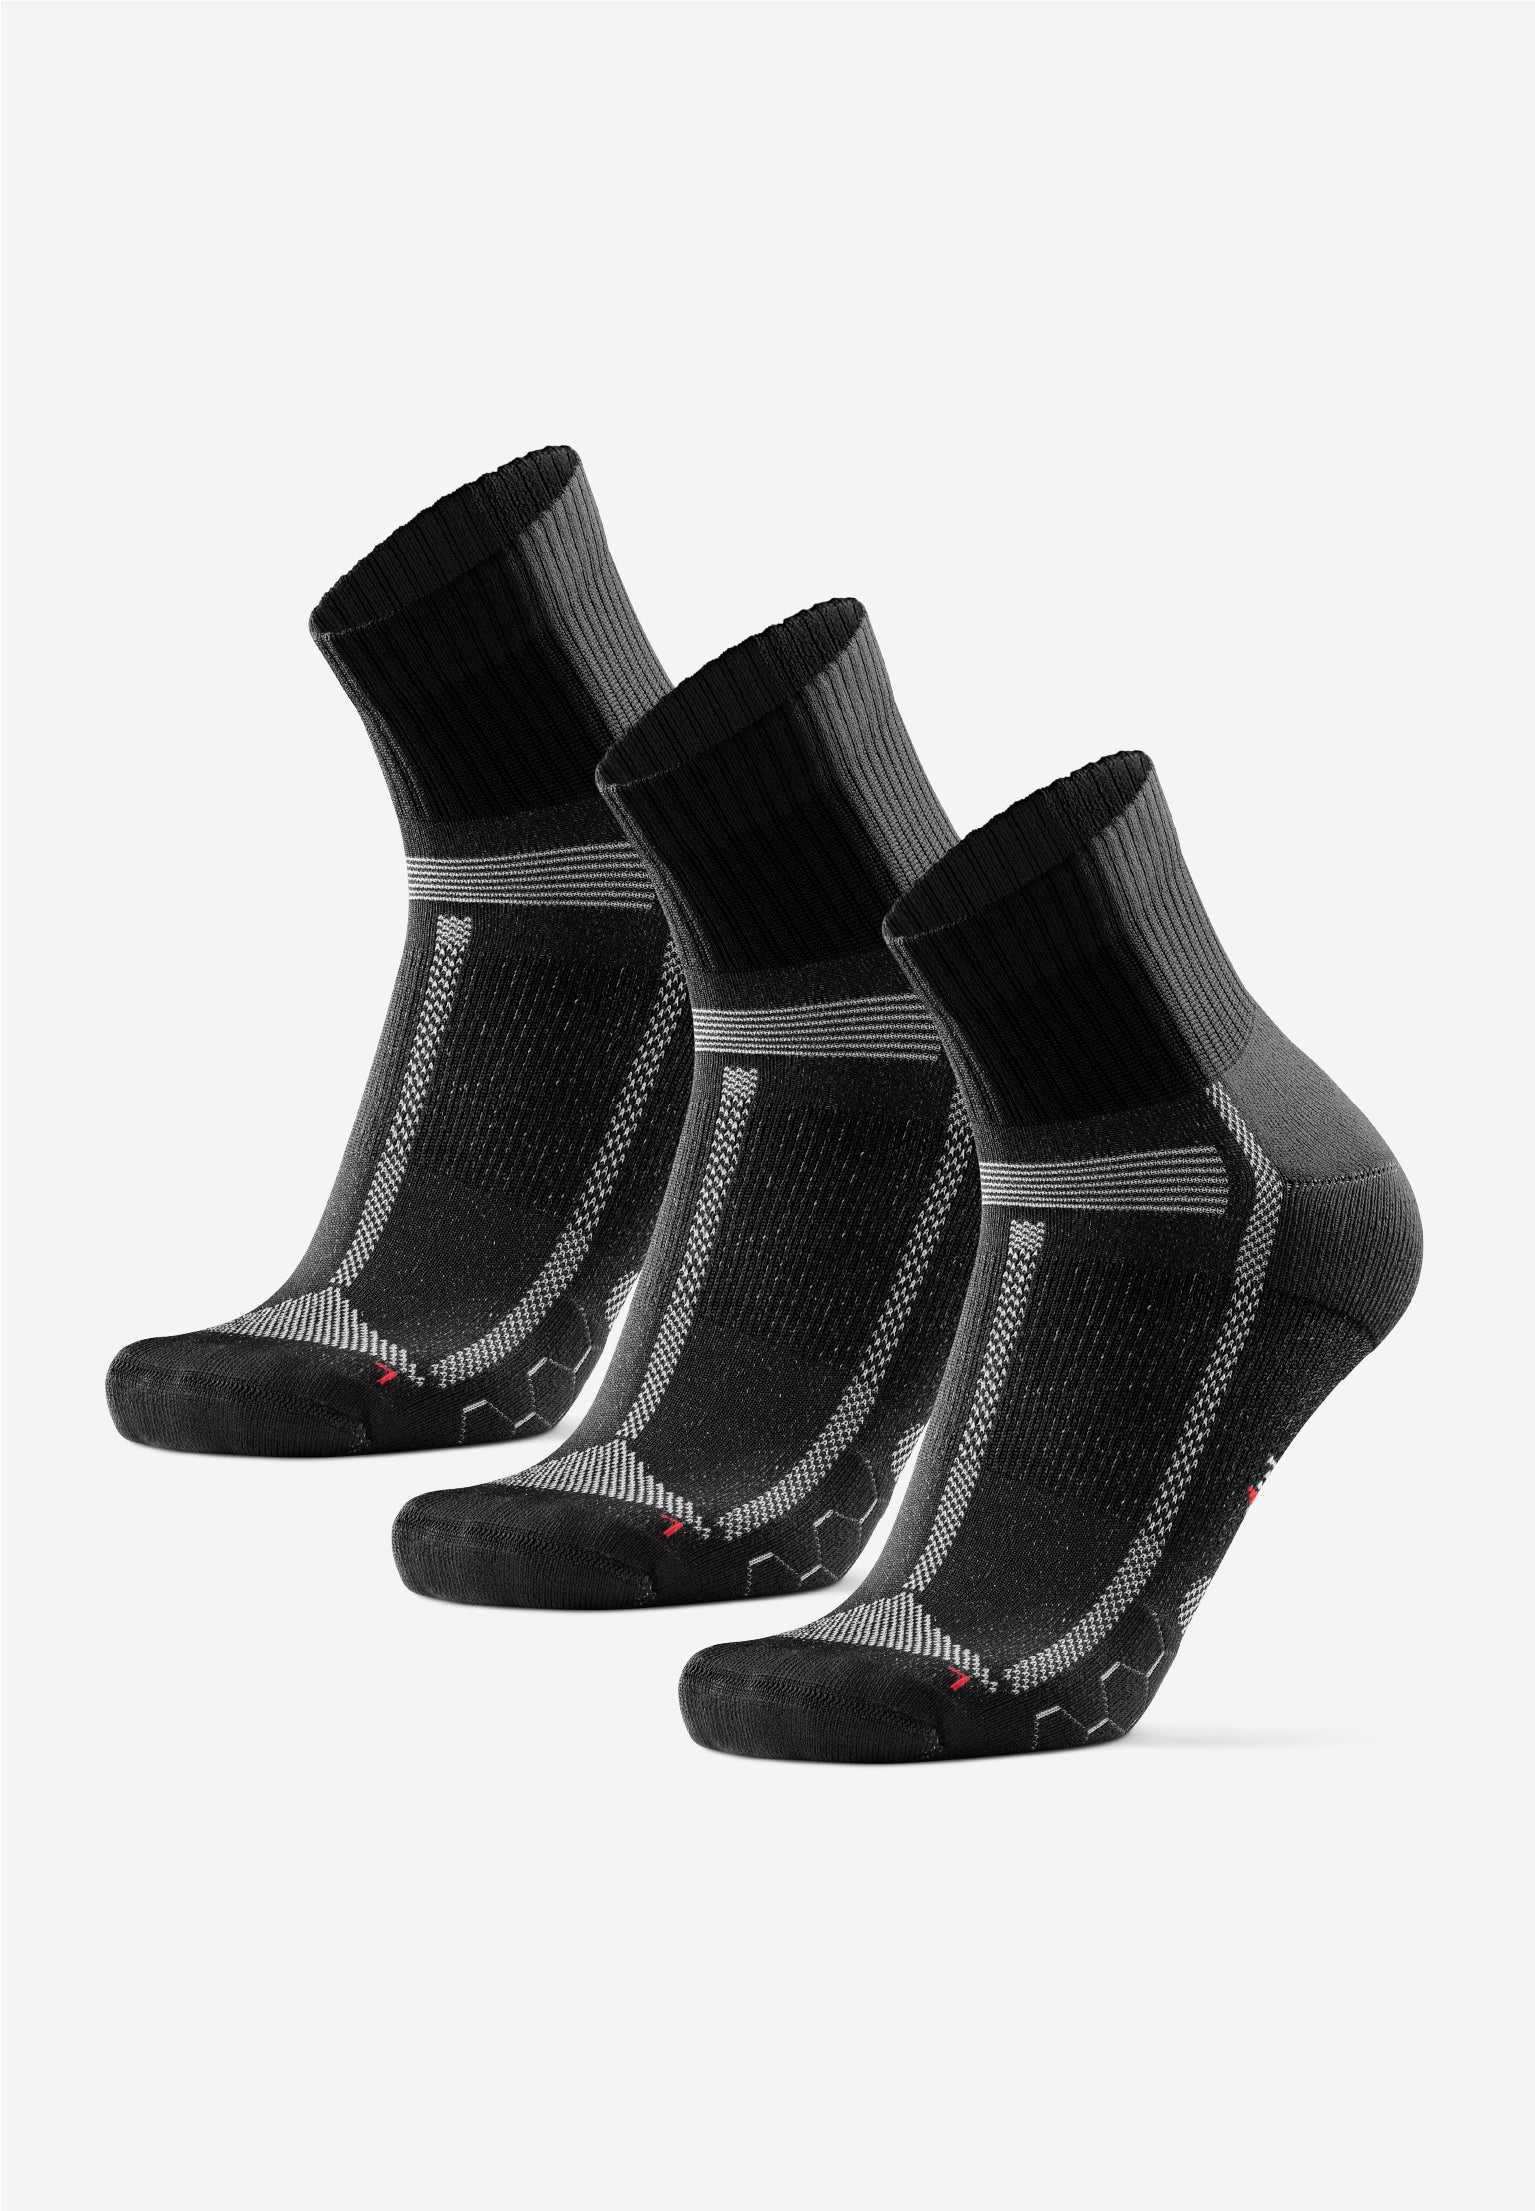 DANISH ENDURANCE Low-Cut Long Distance Running Socks, Sweat Wicking,  Cushioned & Anti-Blister, 3 Pair Pack for Men & Women at  Men's  Clothing store